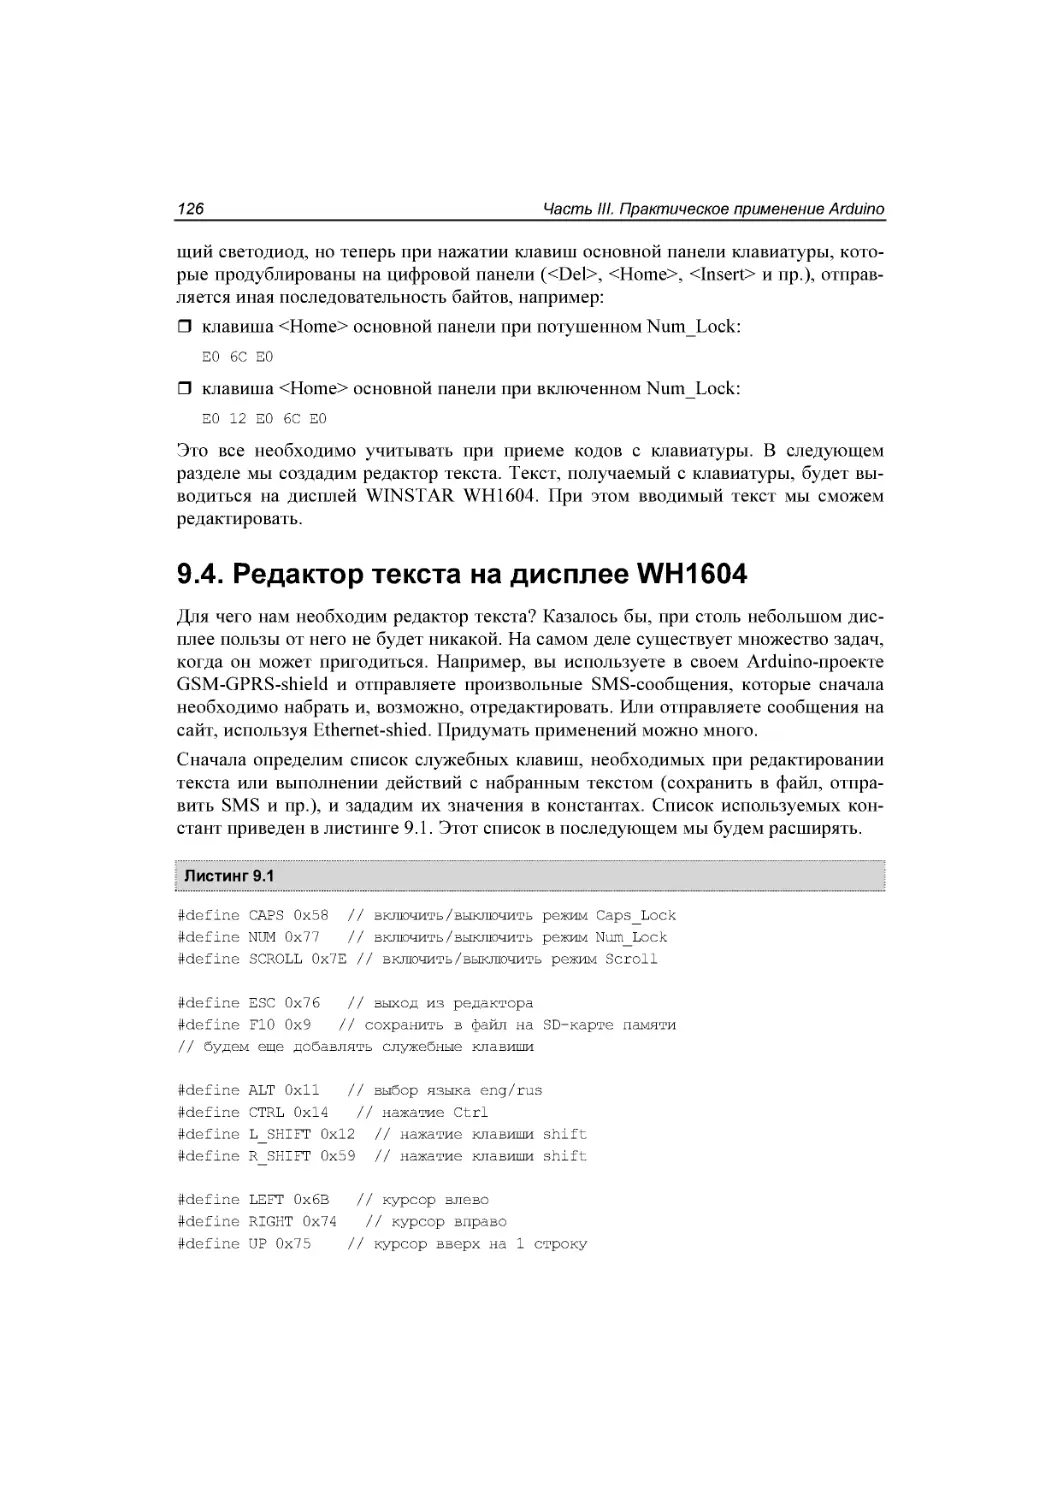 ﻿9.4. Редактор текста на дисплее WH1604